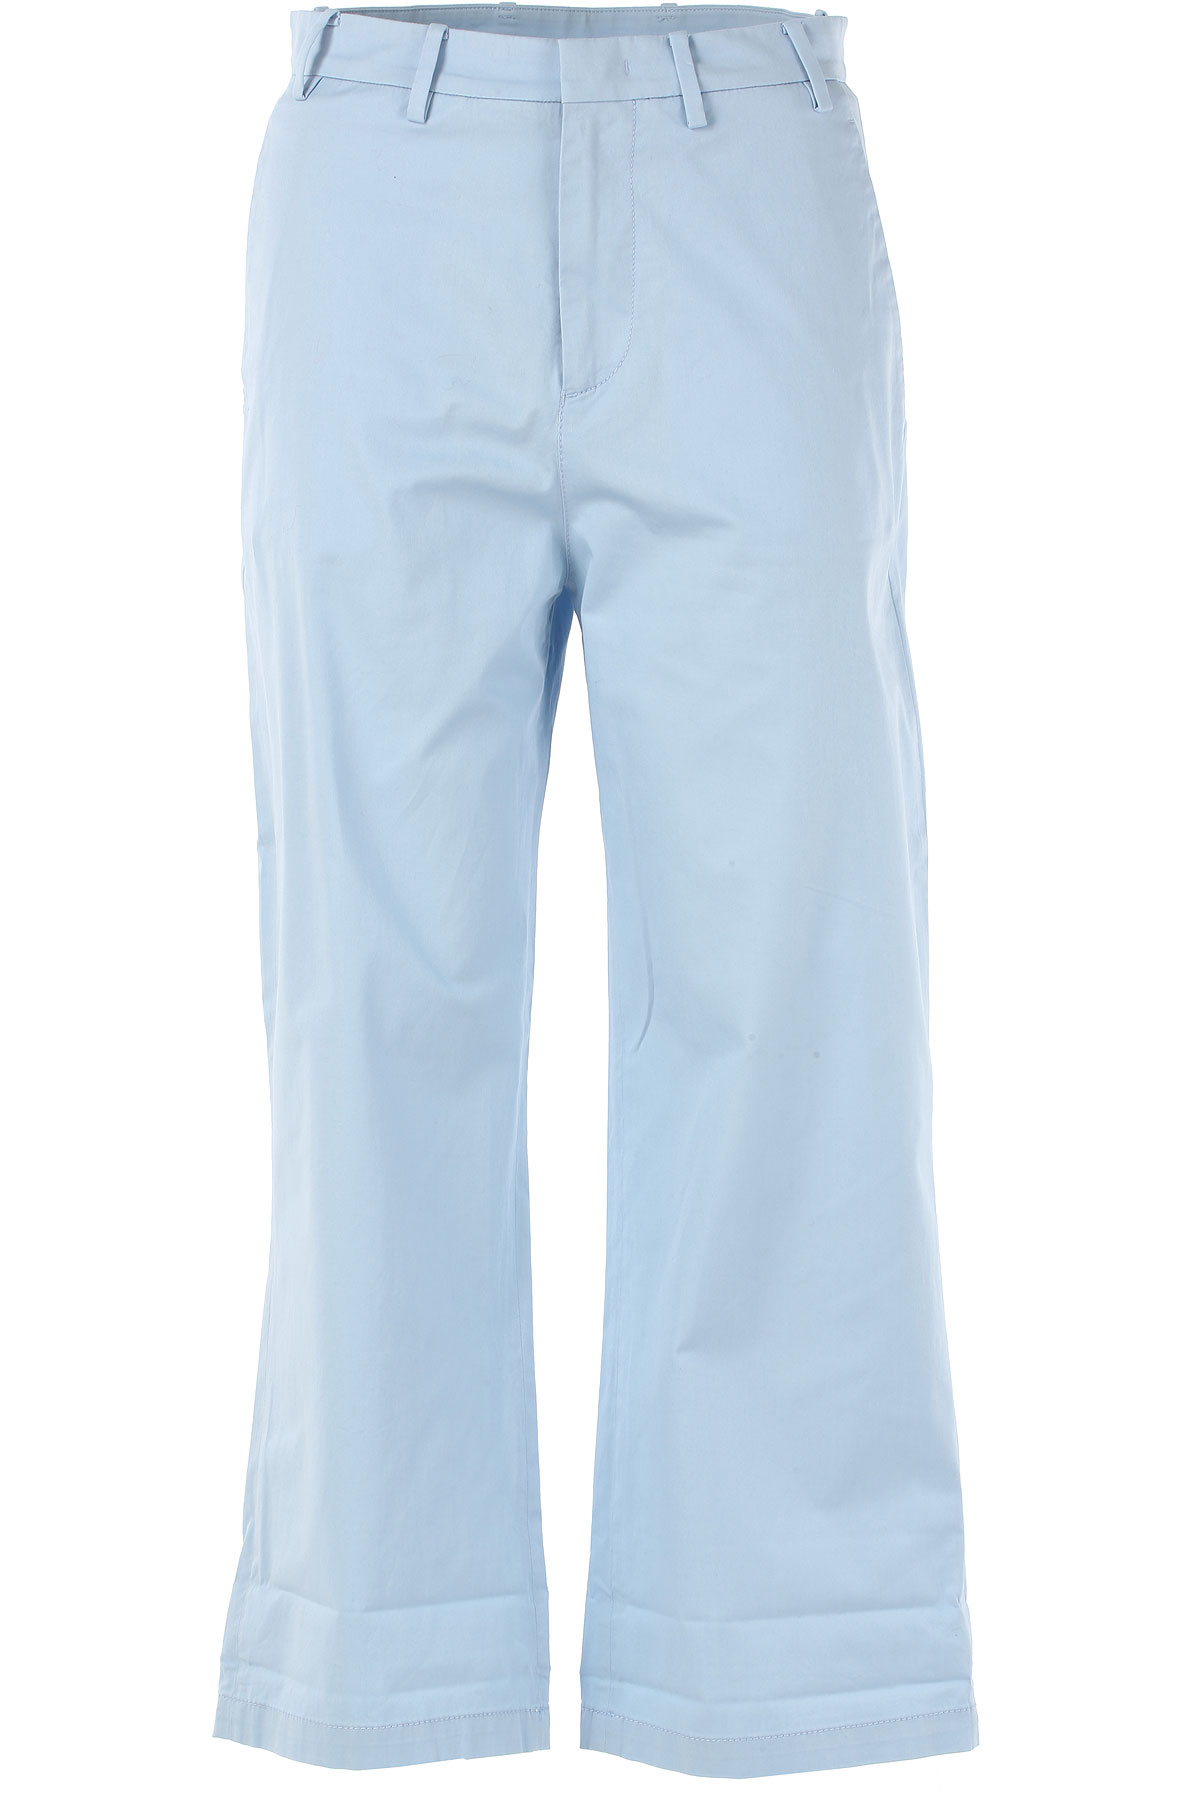 NO 21 Pantalon Femme , Bleu ciel, Coton, 2017, 38 40 42